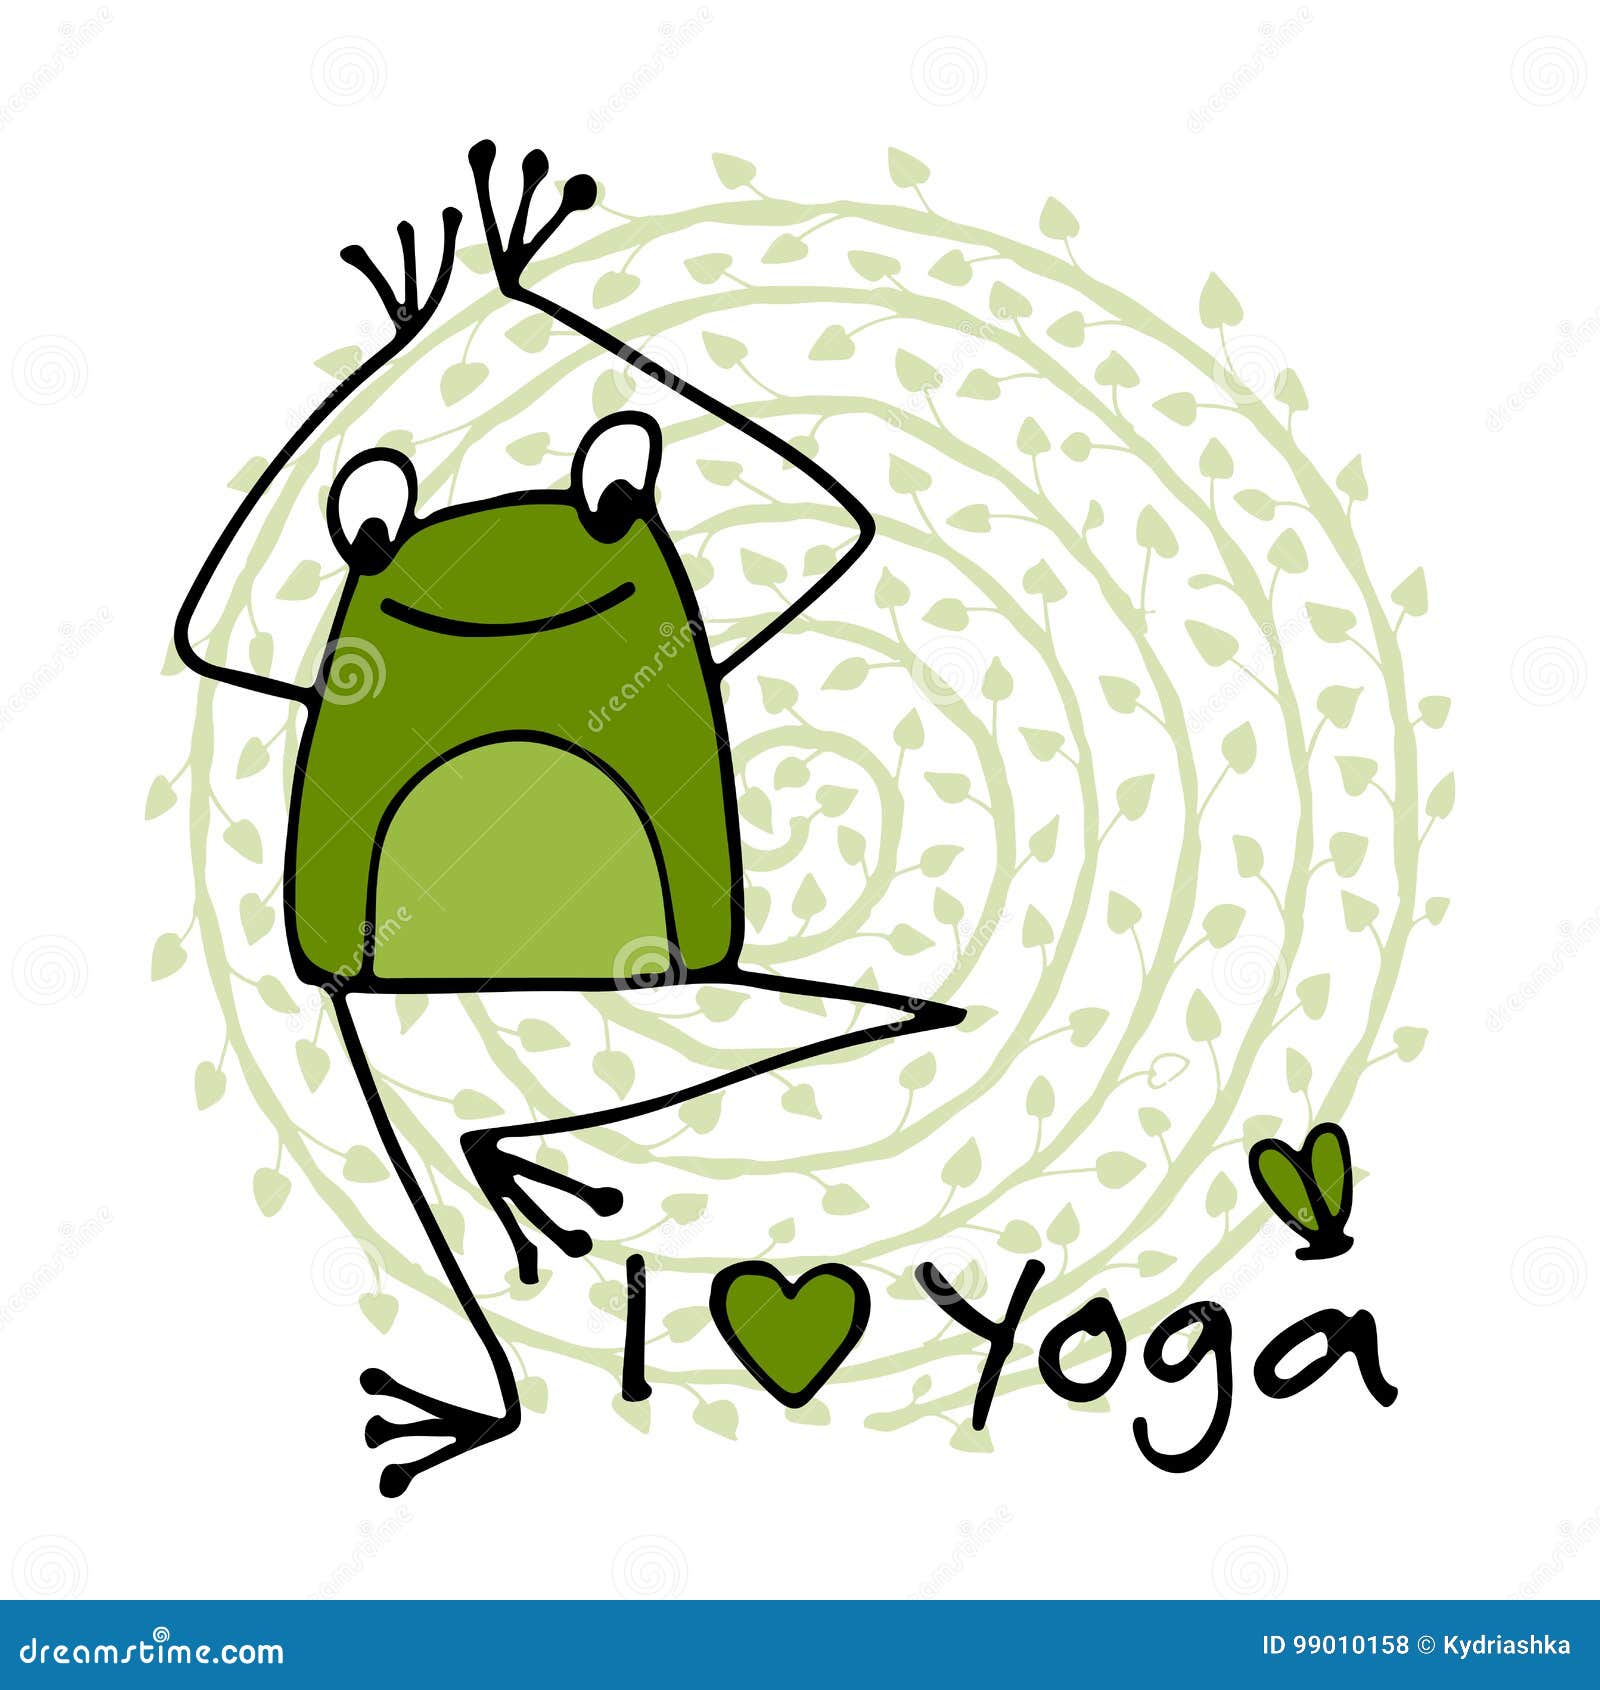 13000 Yoga Drawings Illustrations RoyaltyFree Vector Graphics  Clip  Art  iStock  Yoga poses